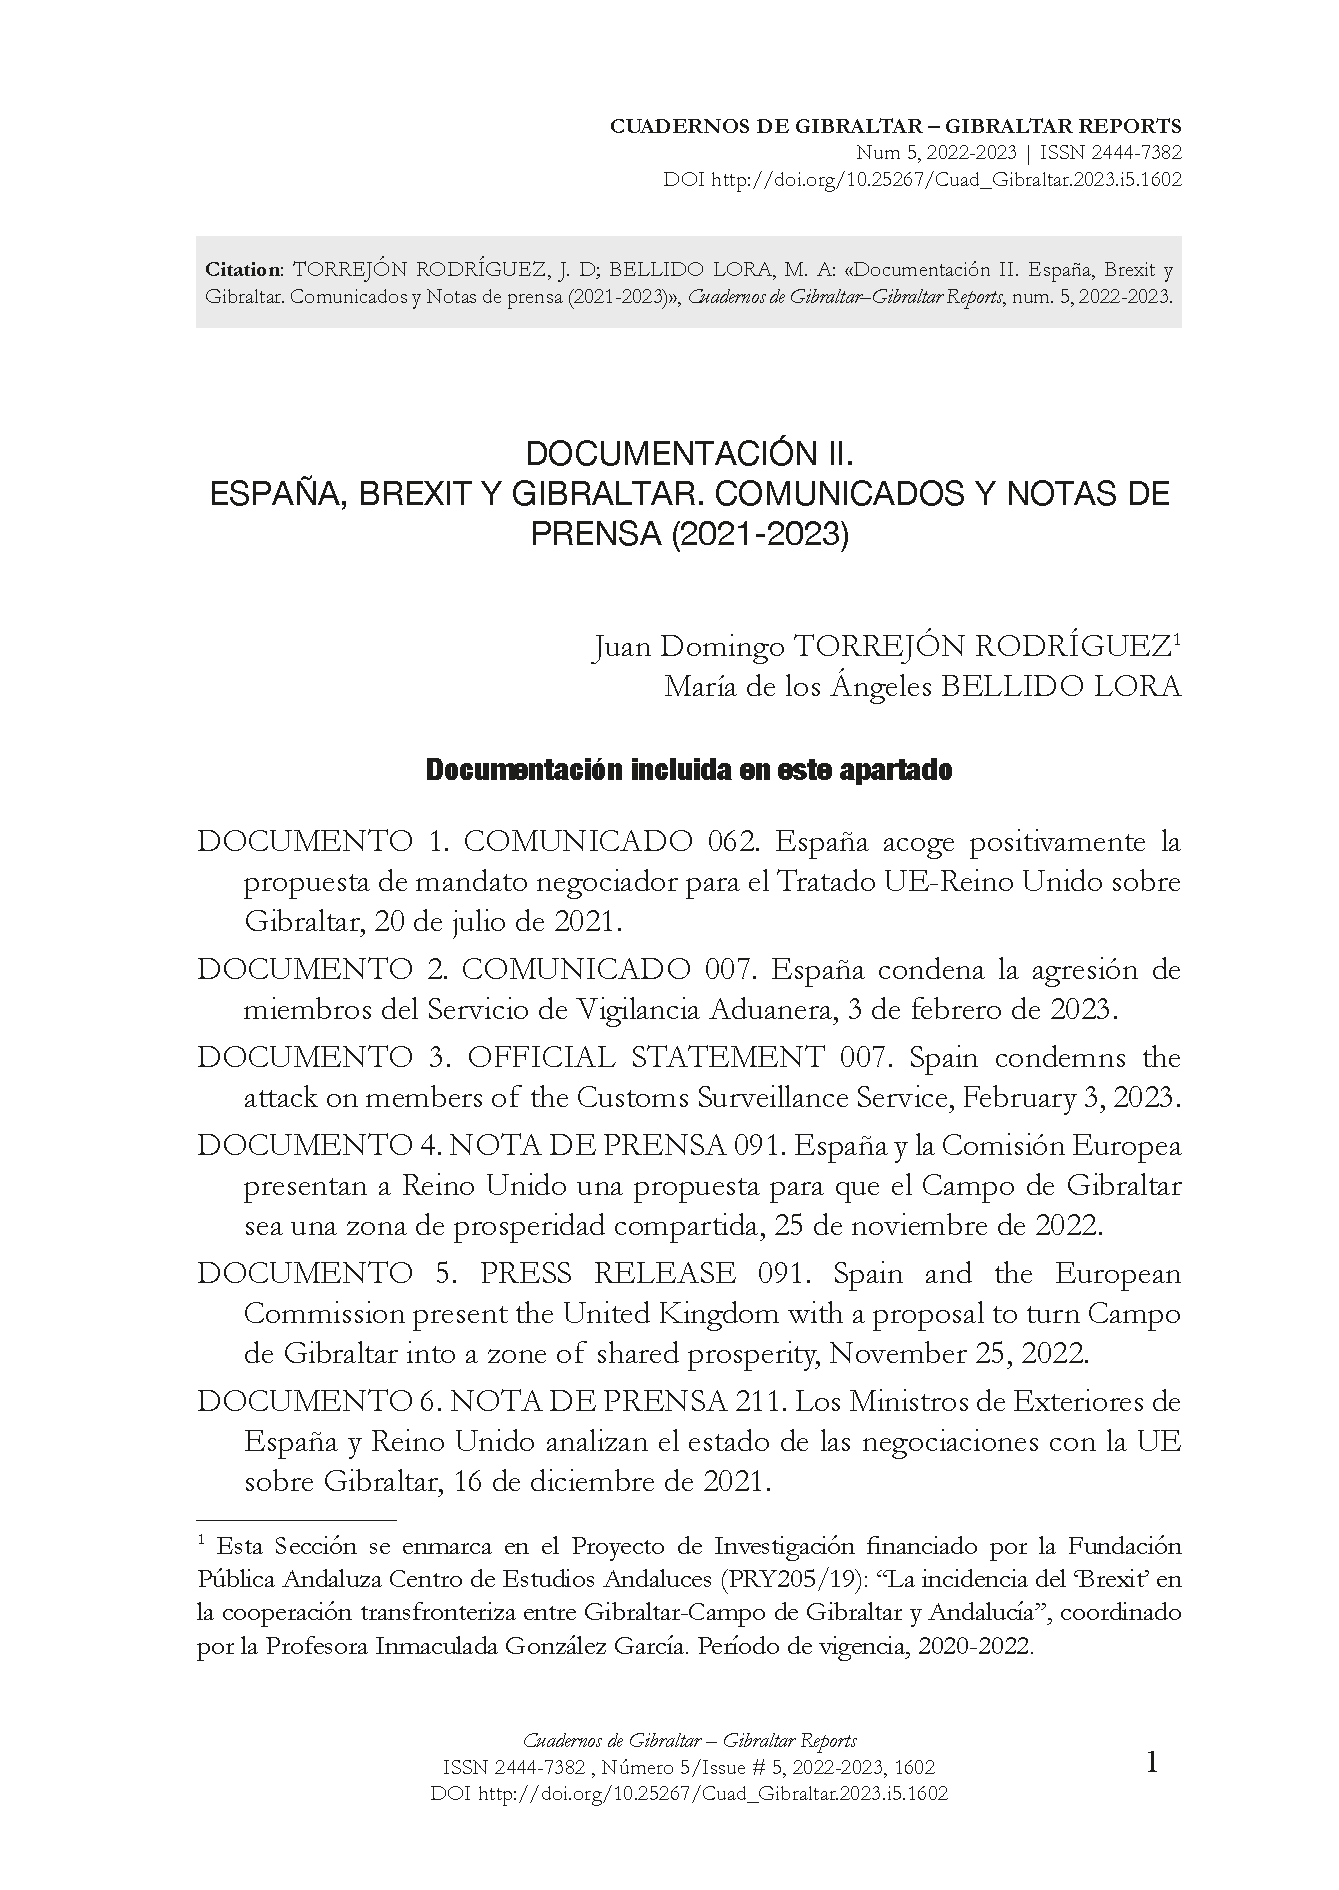 Documentación II. España, Brexit y Gibraltar. Comunicados y Notas de prensa (2021-2023)